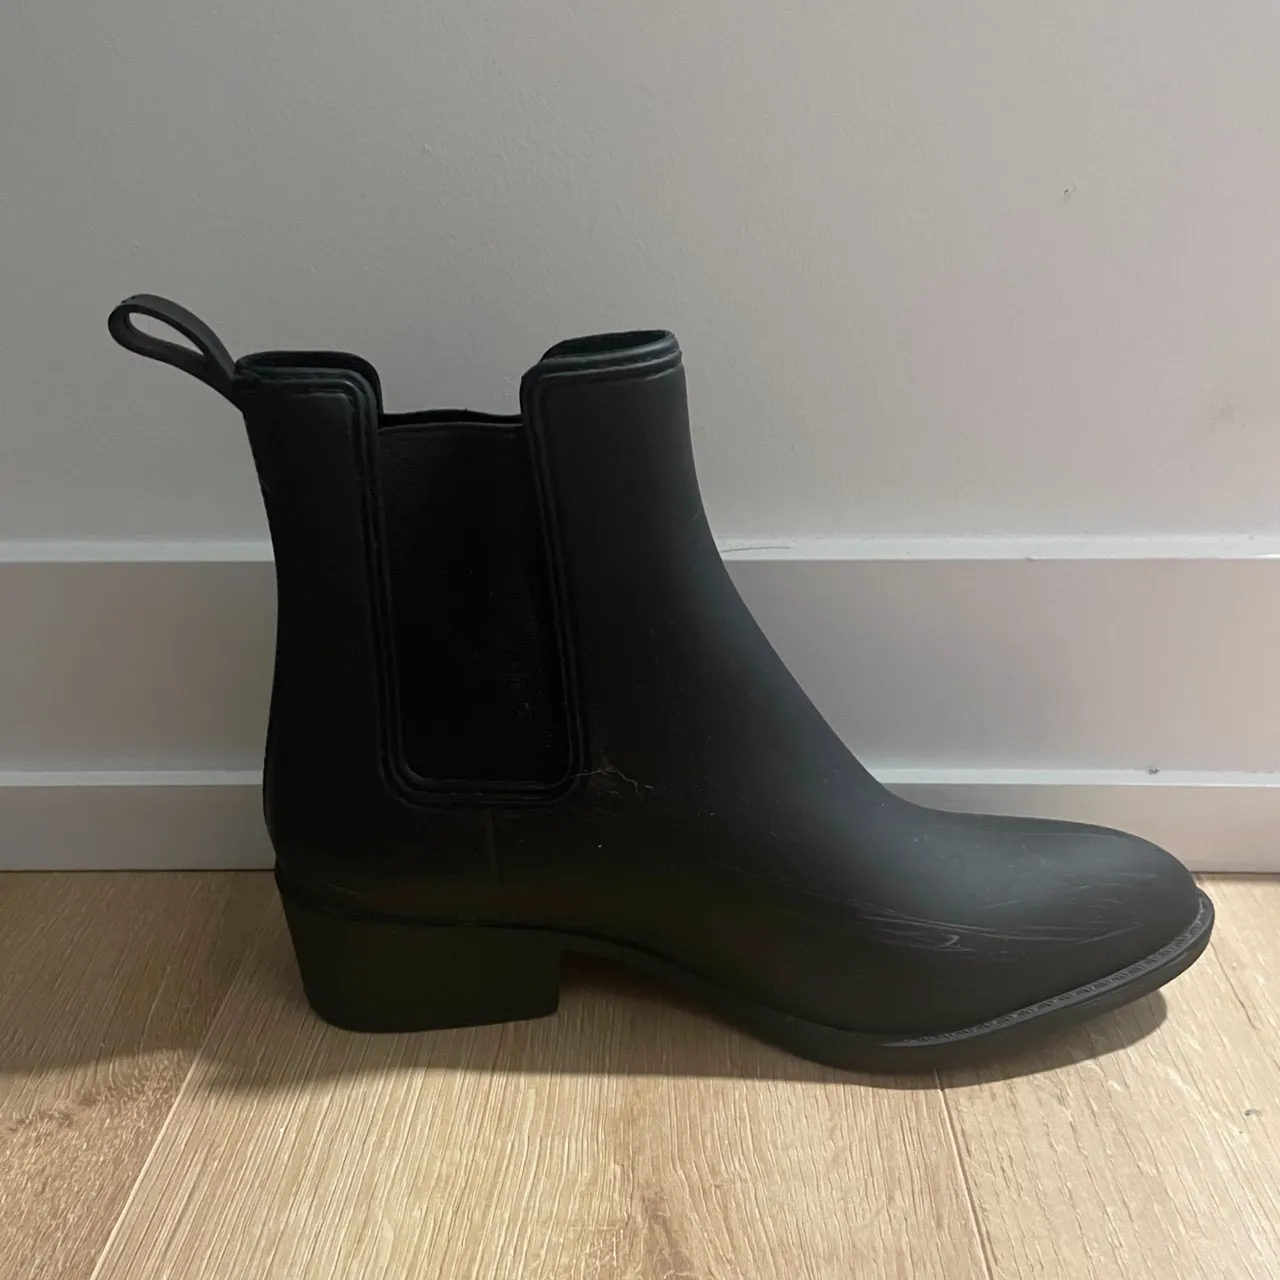 Jeffrey campbell rain boots photo 1